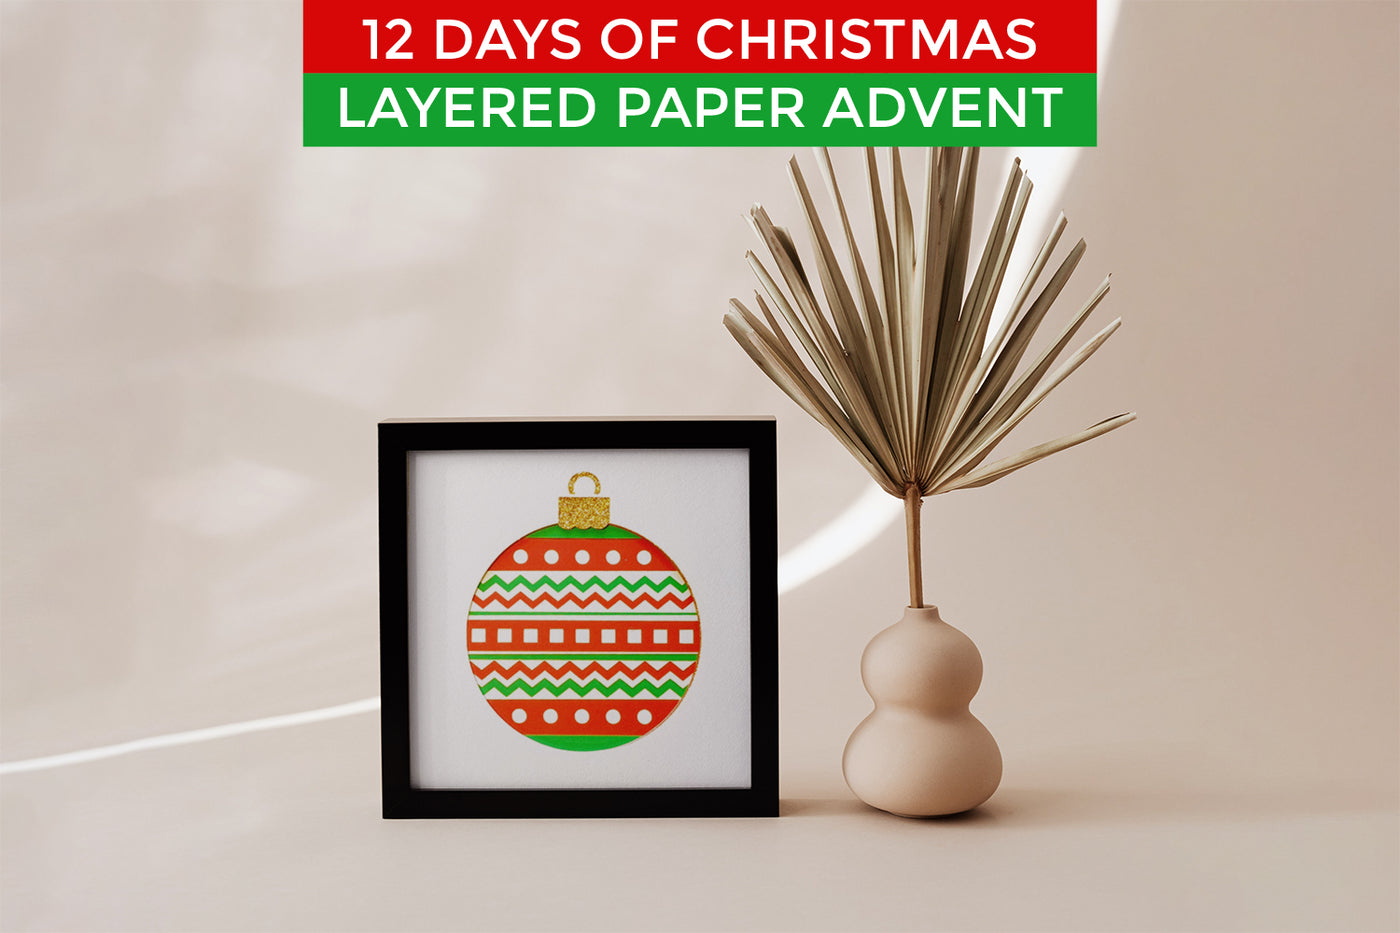 12 days of Christmas layered paper advent calendar SVG